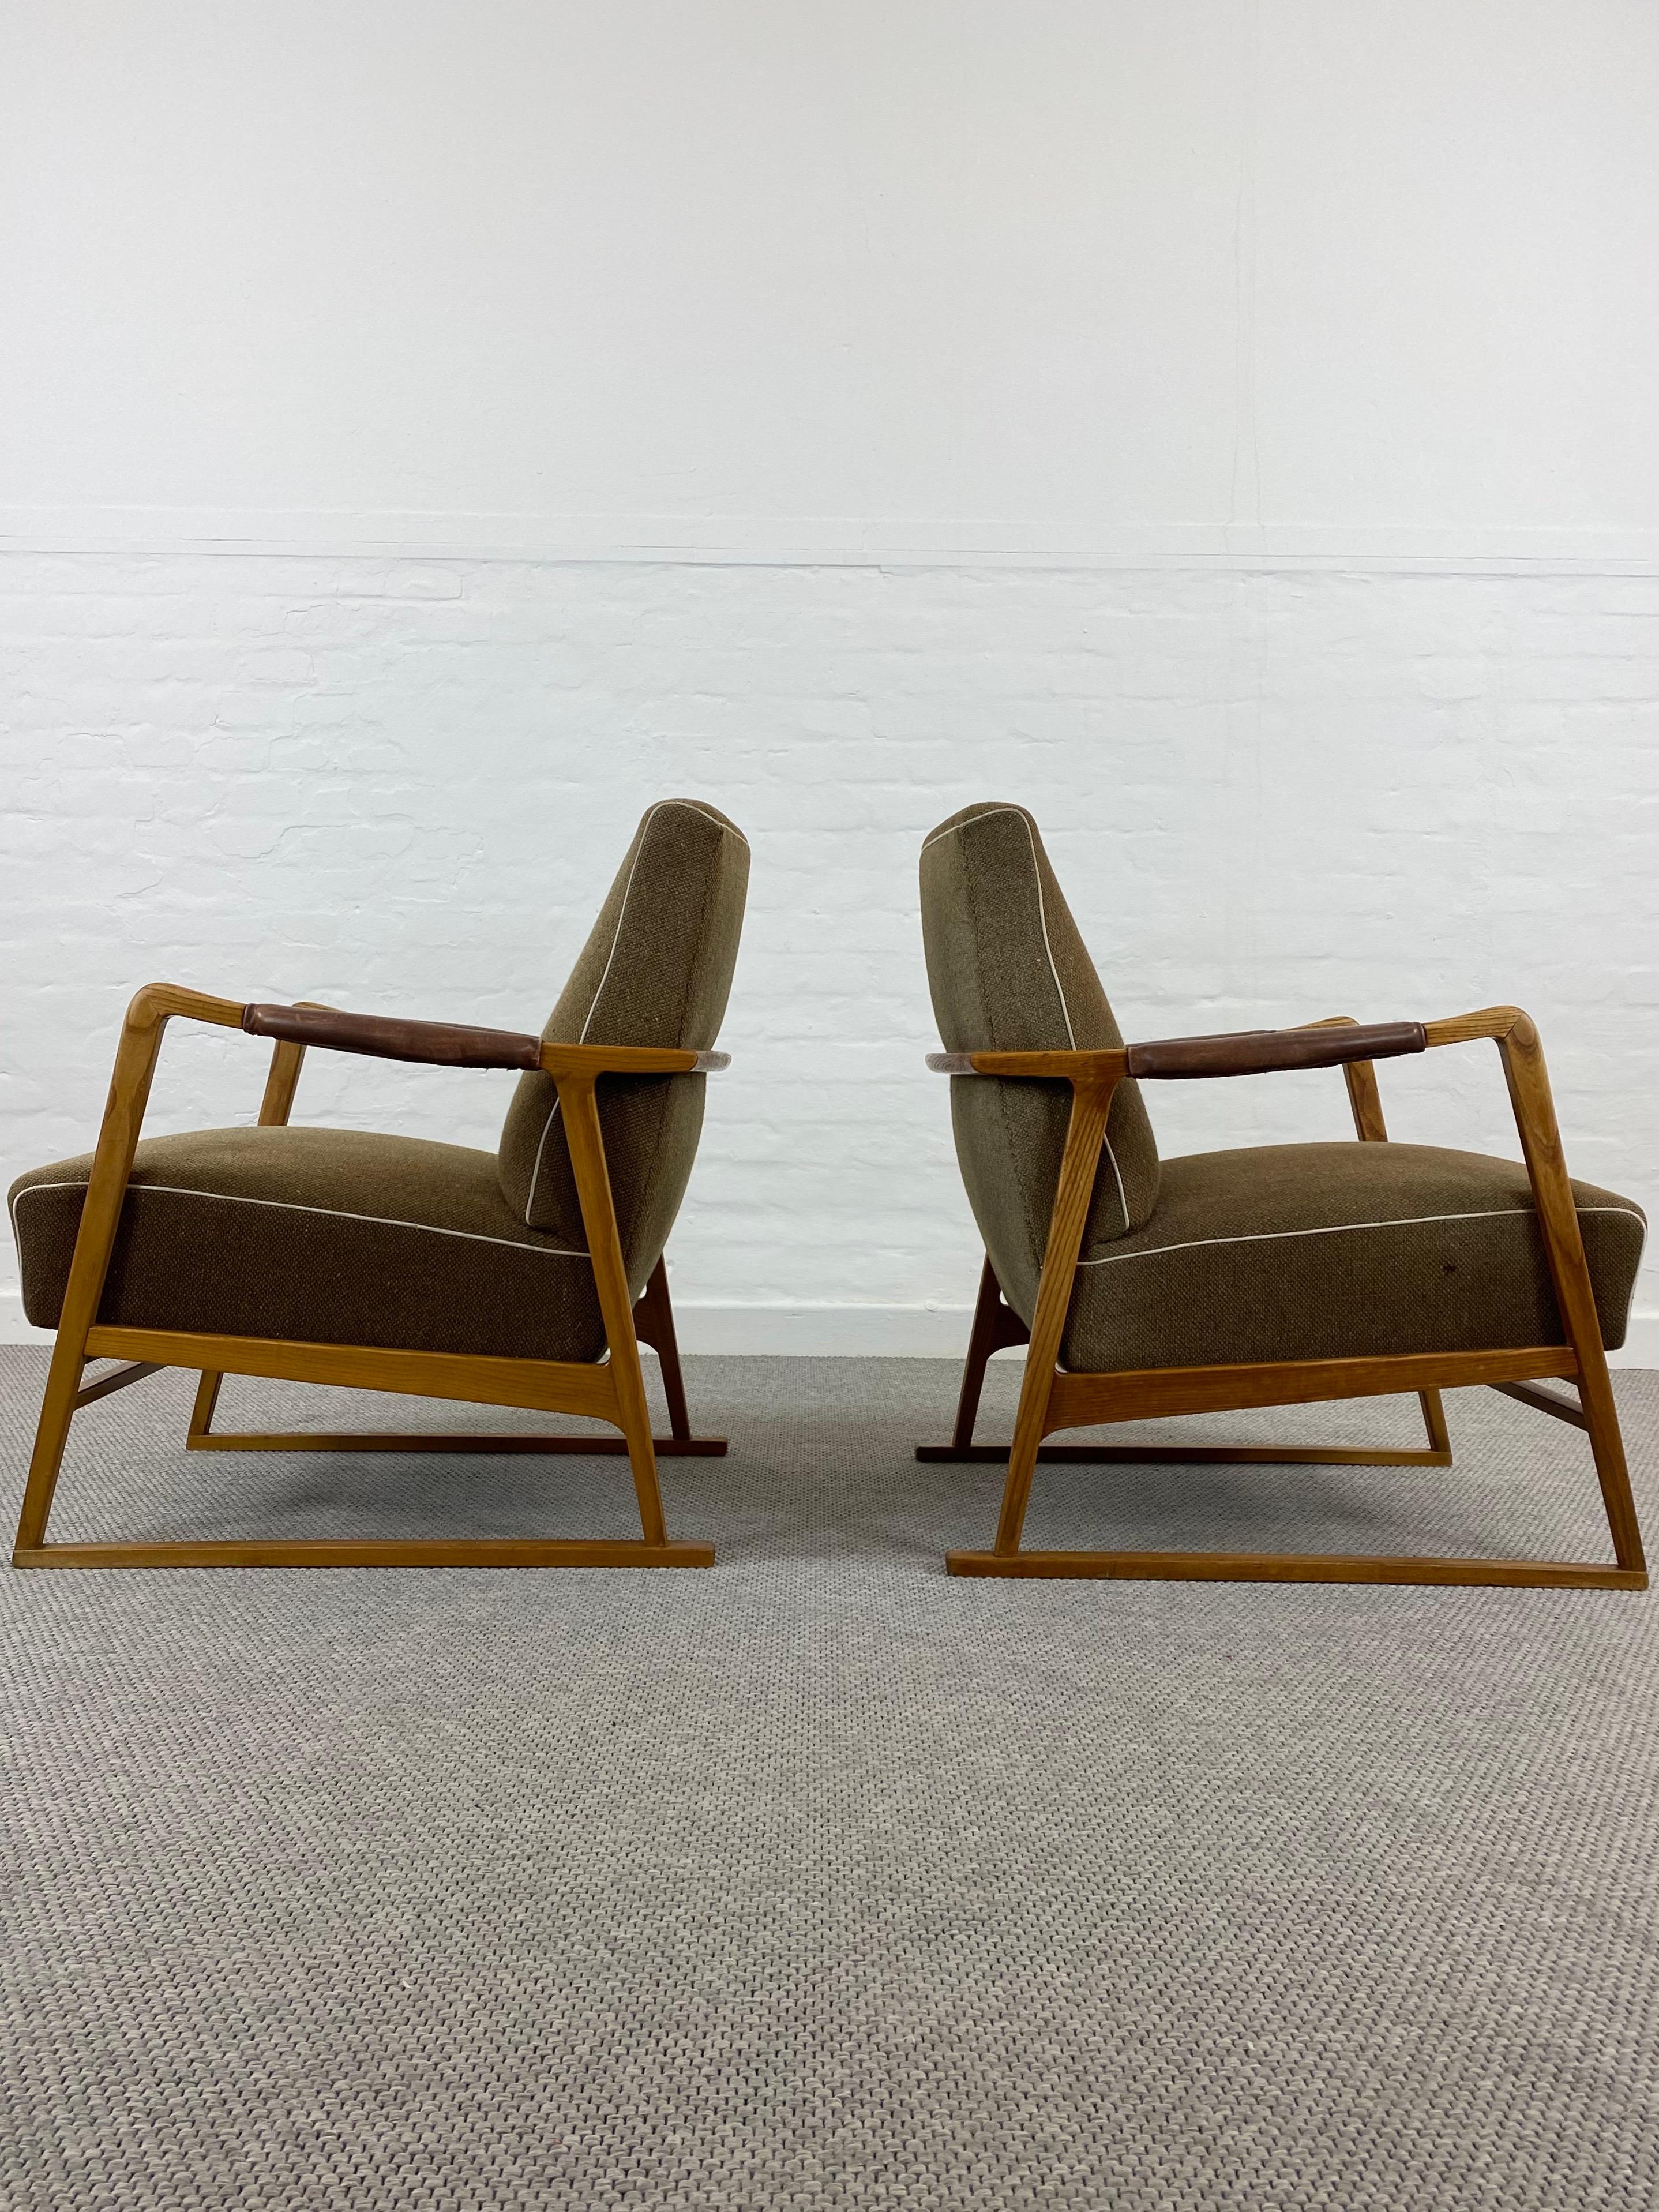 Pair of 1950s Midcentury WK Arm-Chairs with Runners for Deutsche Werkstätten For Sale 13